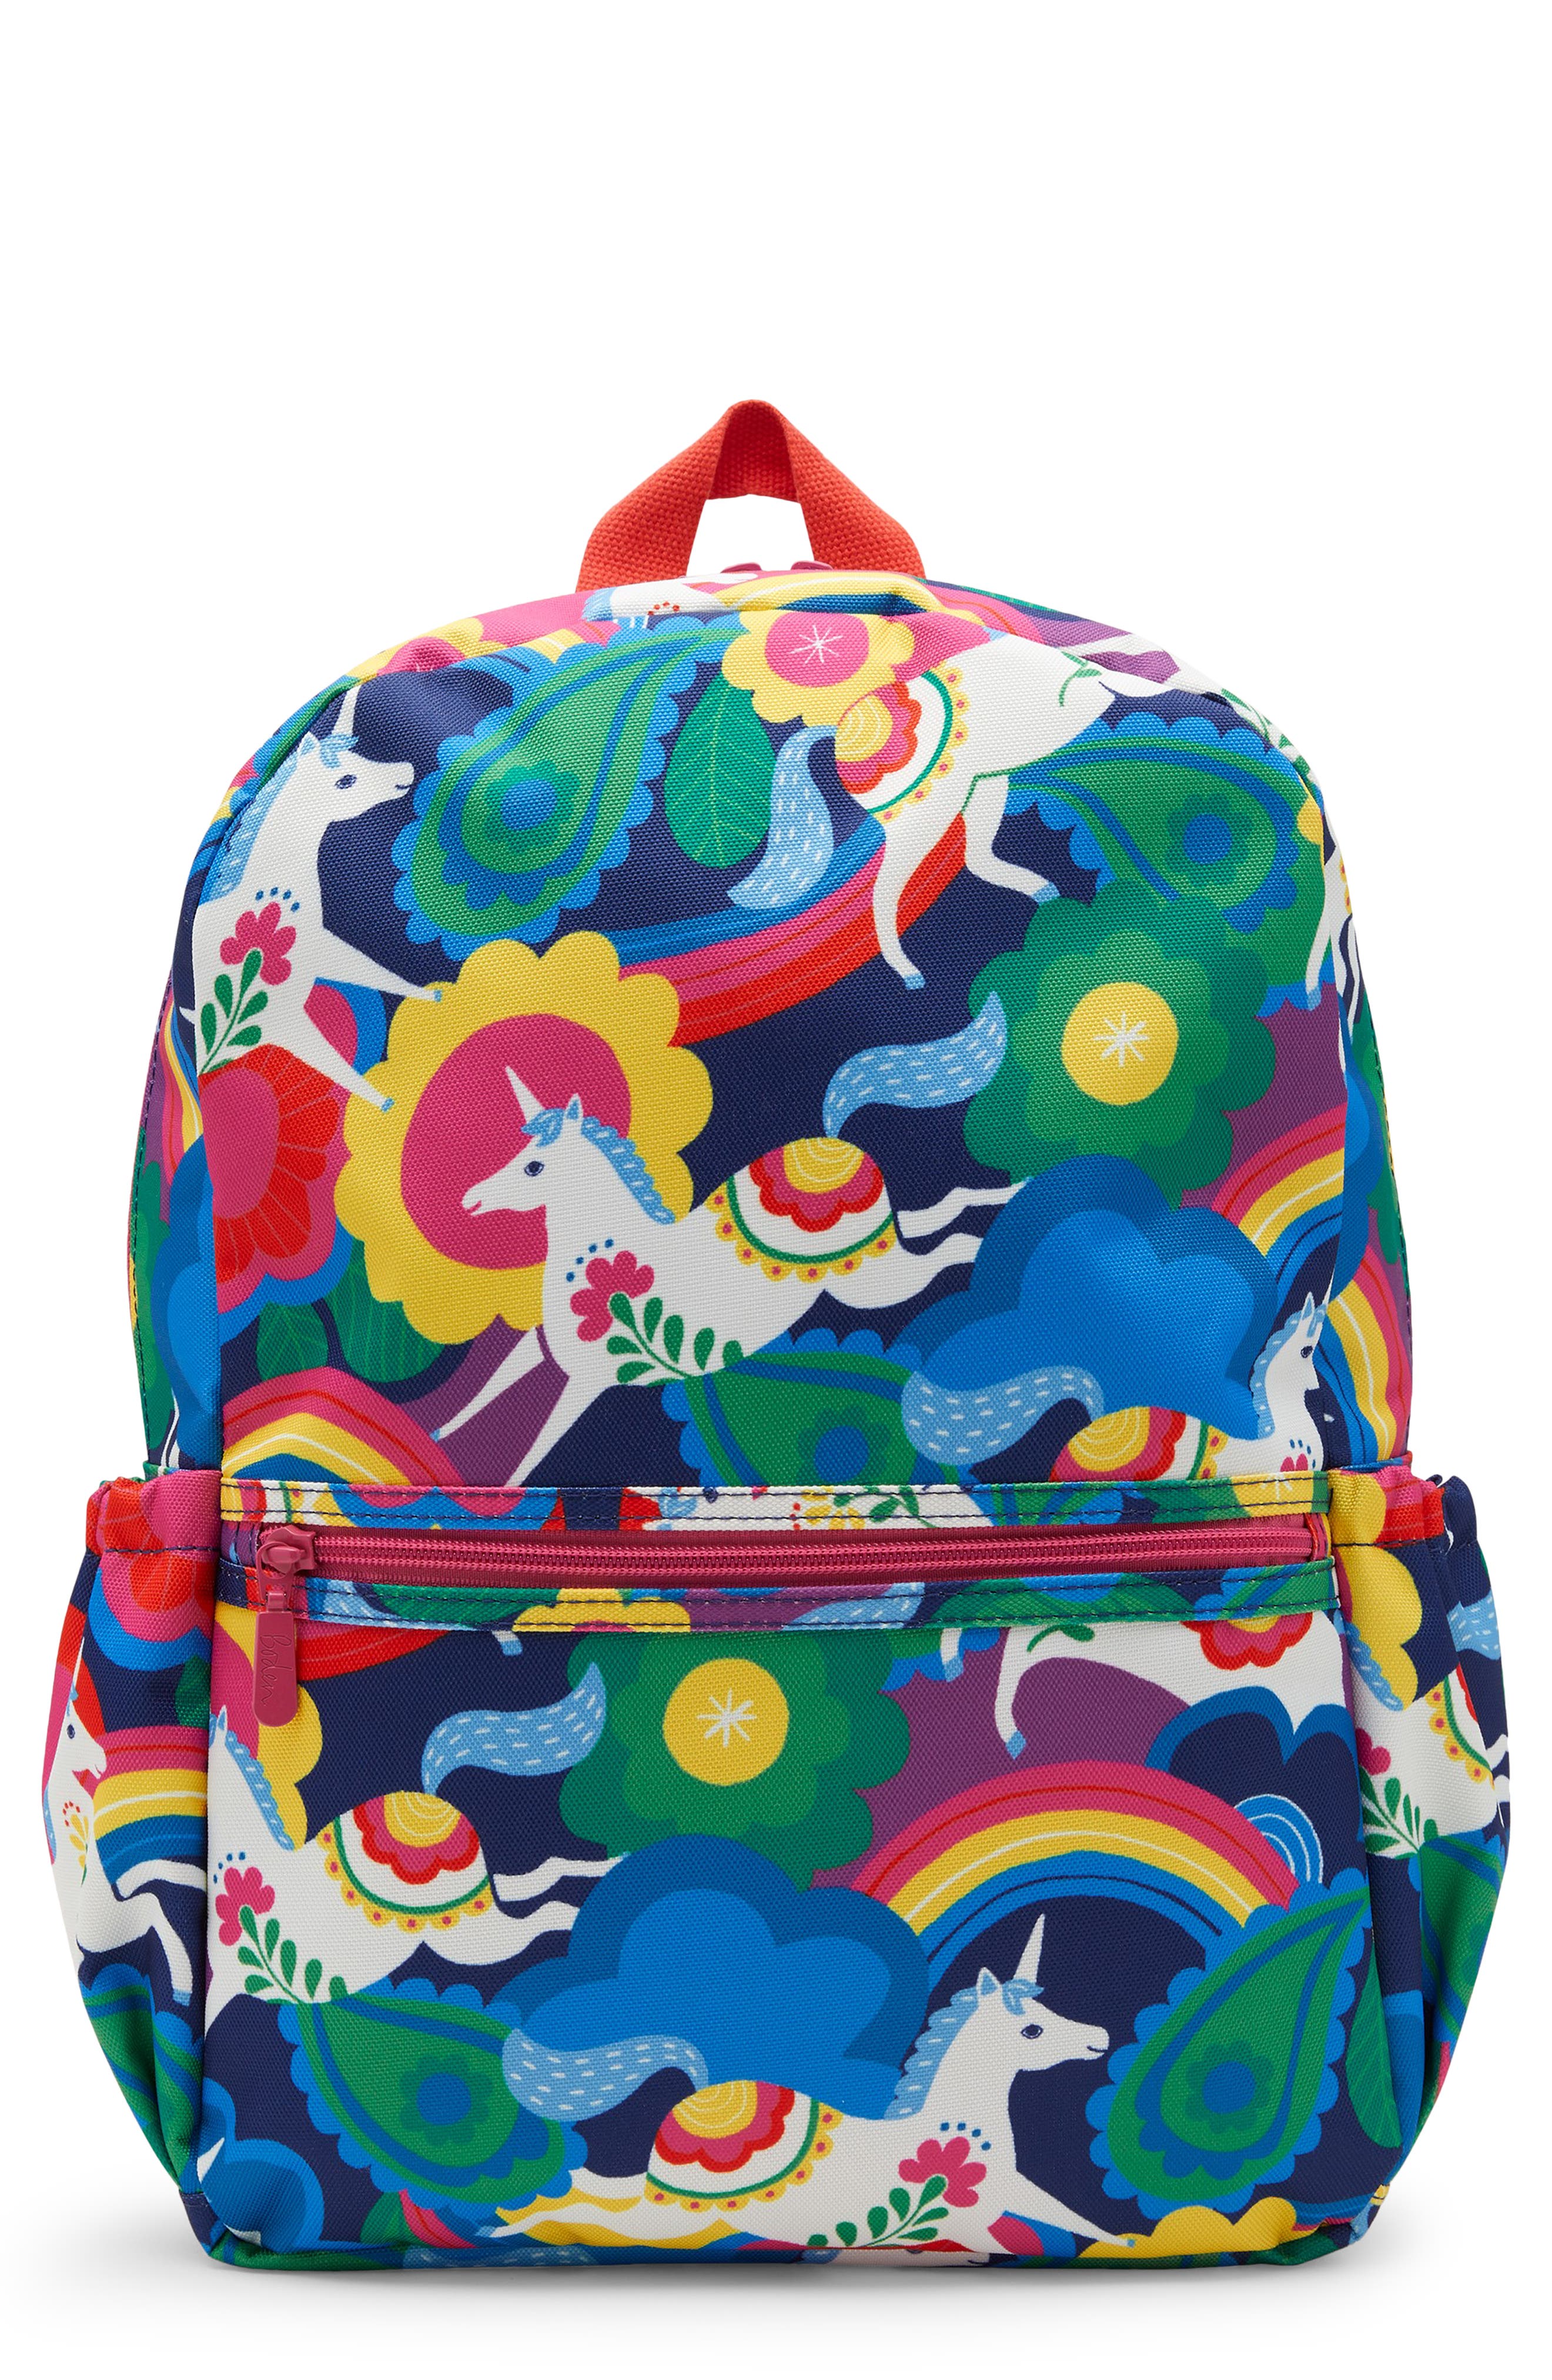 Women's Mickey Mouse Backpack School Girls Bookbags Shopping Bag Sports Bag Gift 